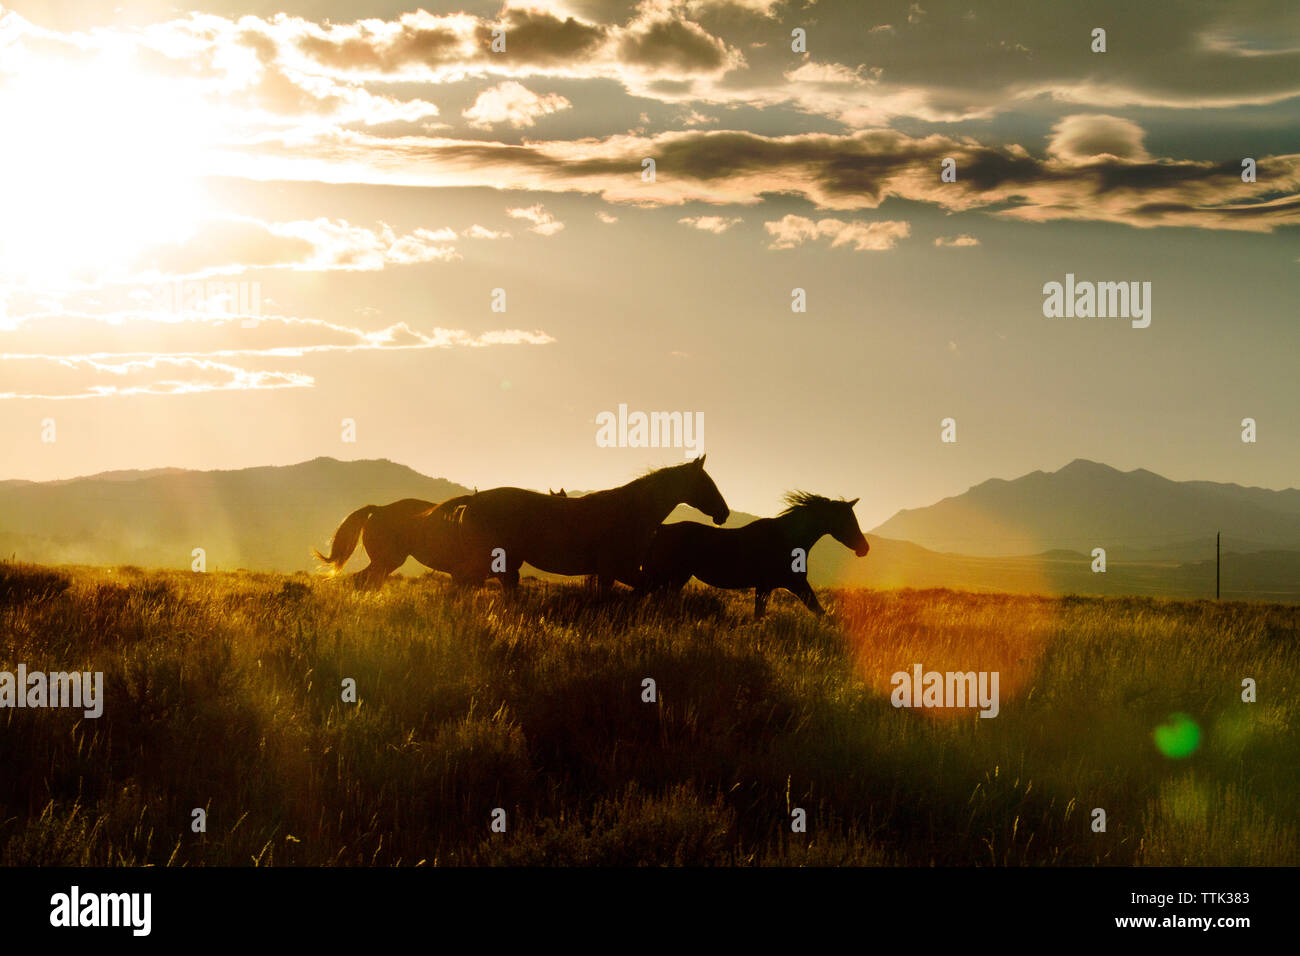 Horses running on field against sky during sunset Stock Photo